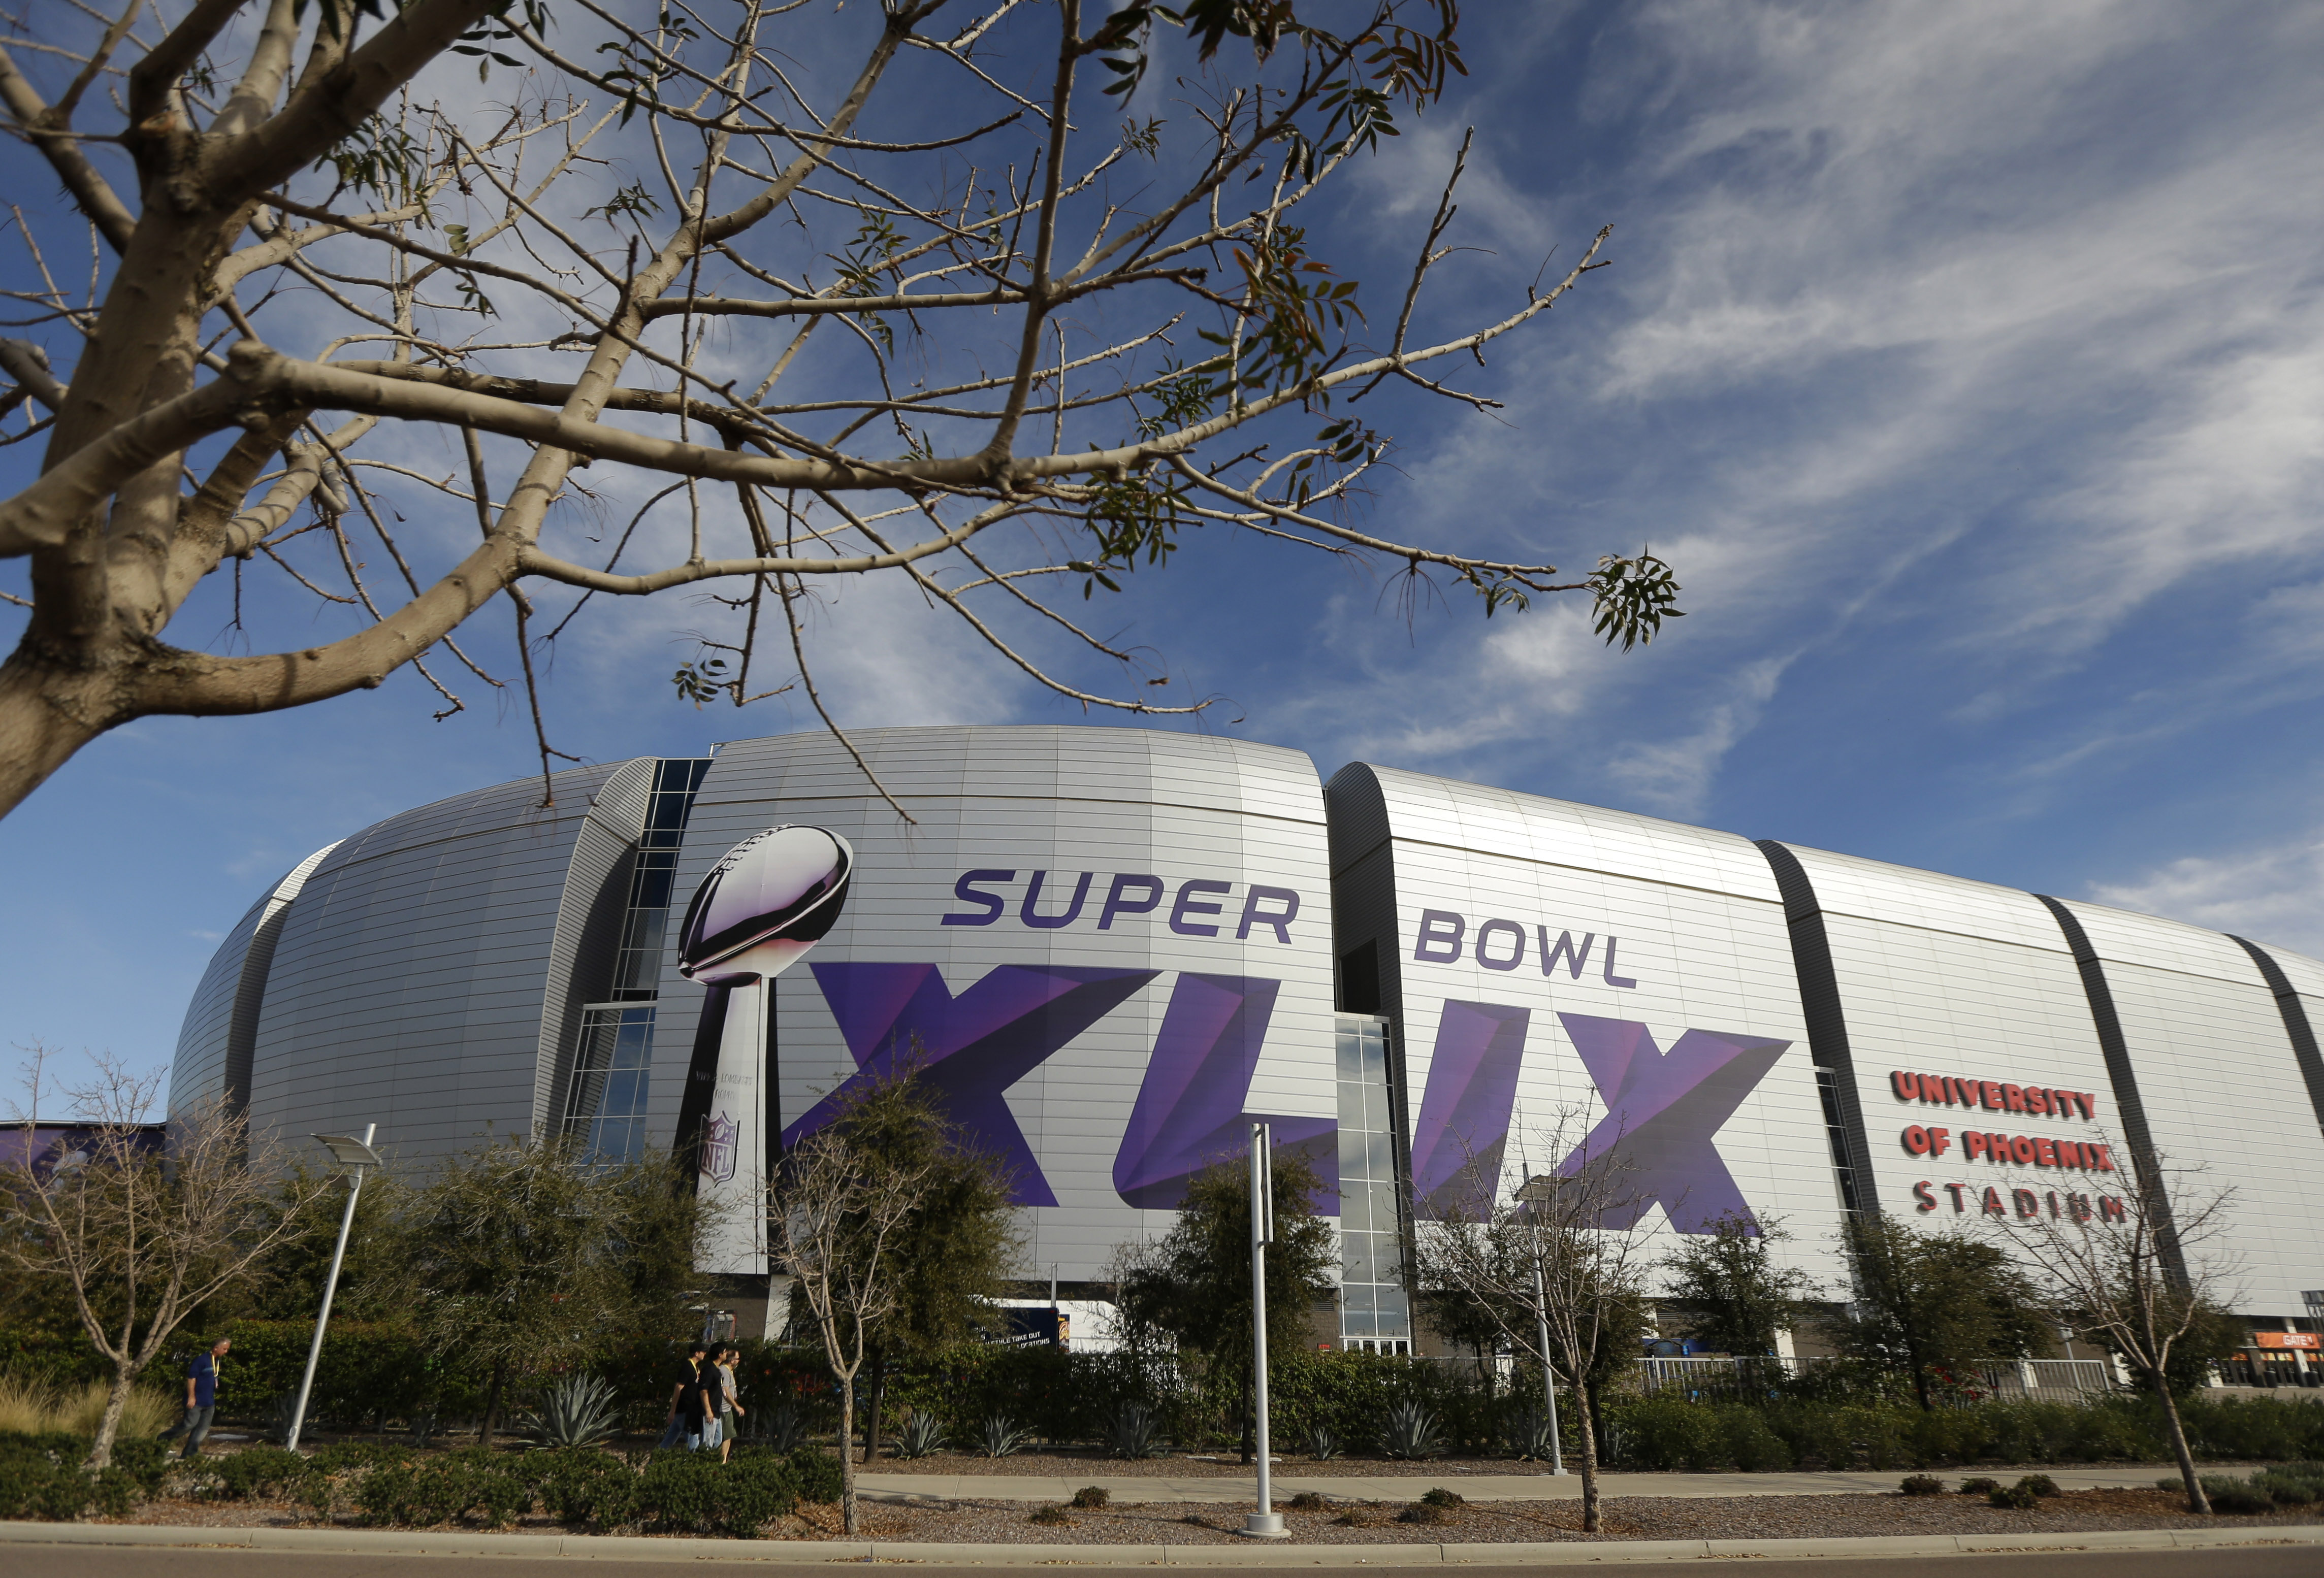 The University of Phoenix Stadium in Glendale, Ariz, where Super Bowl XLIX will take place on Feb. 1, 2015.